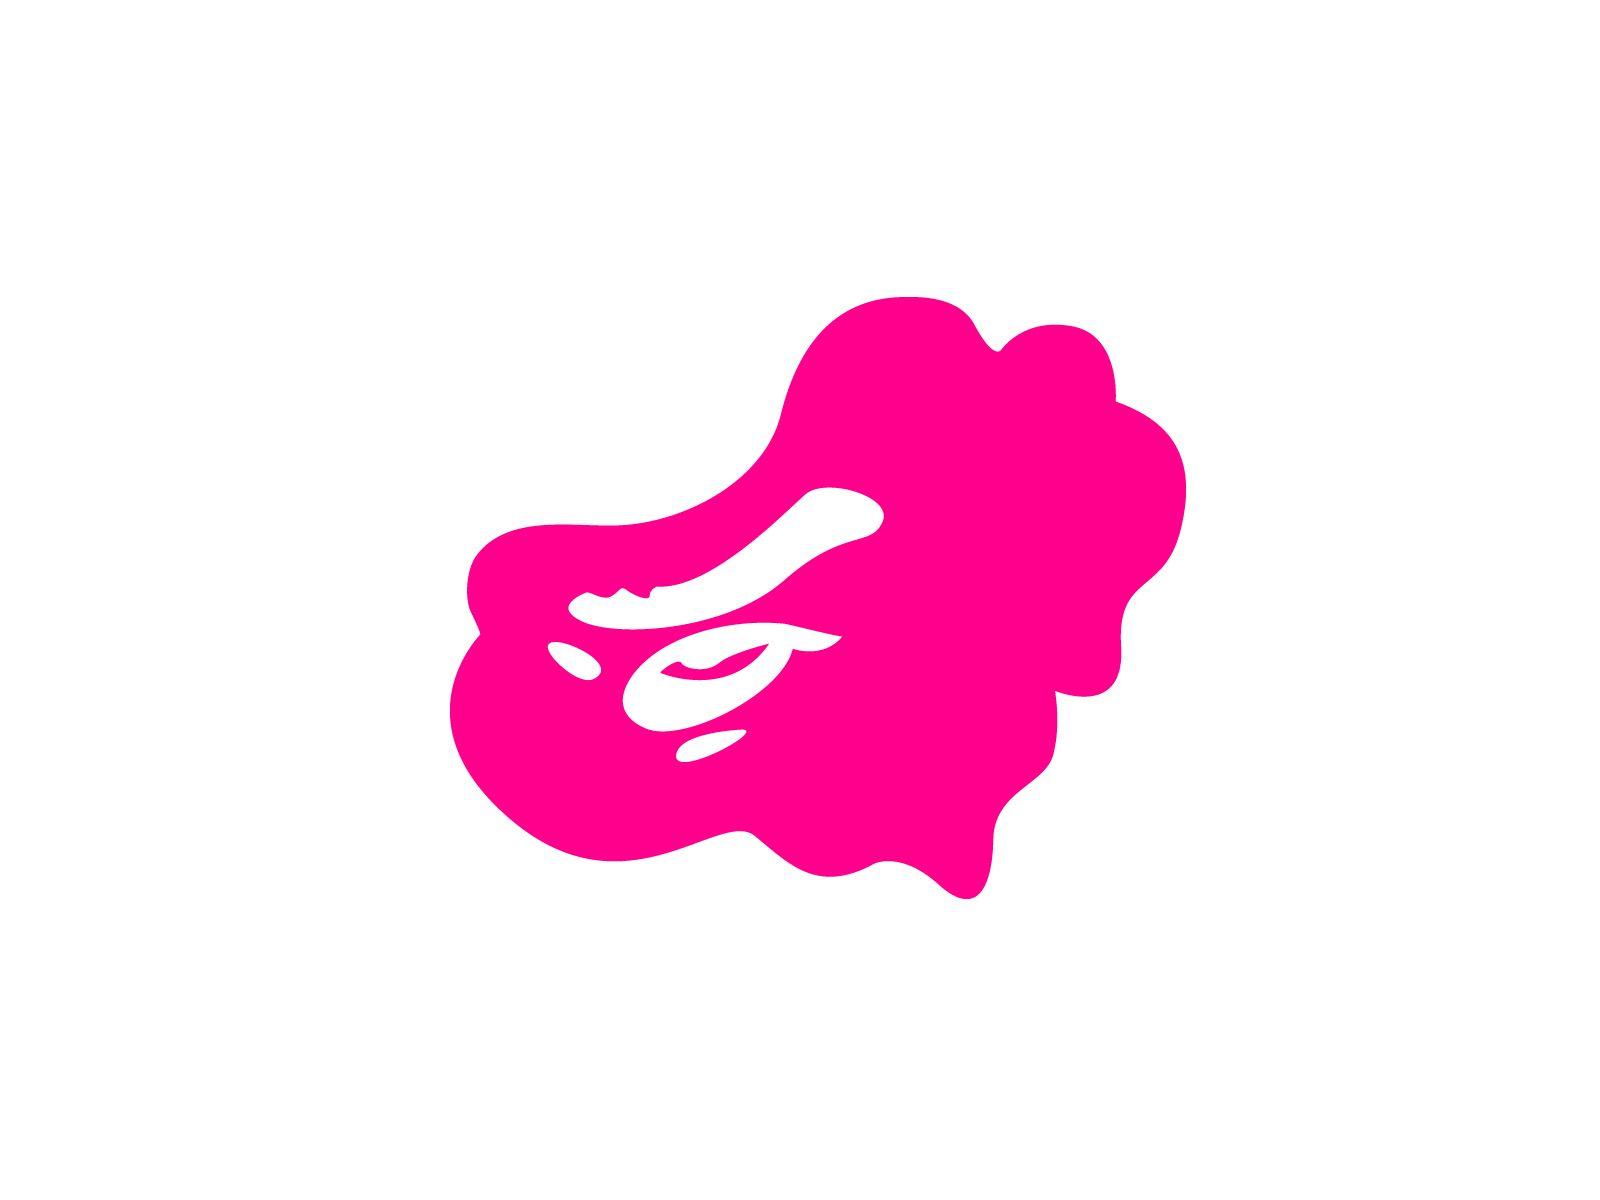 Pink BAPE Logo - Download the Cloud Camo Bape Wallpaper, Cloud Camo Bape iPhone ...